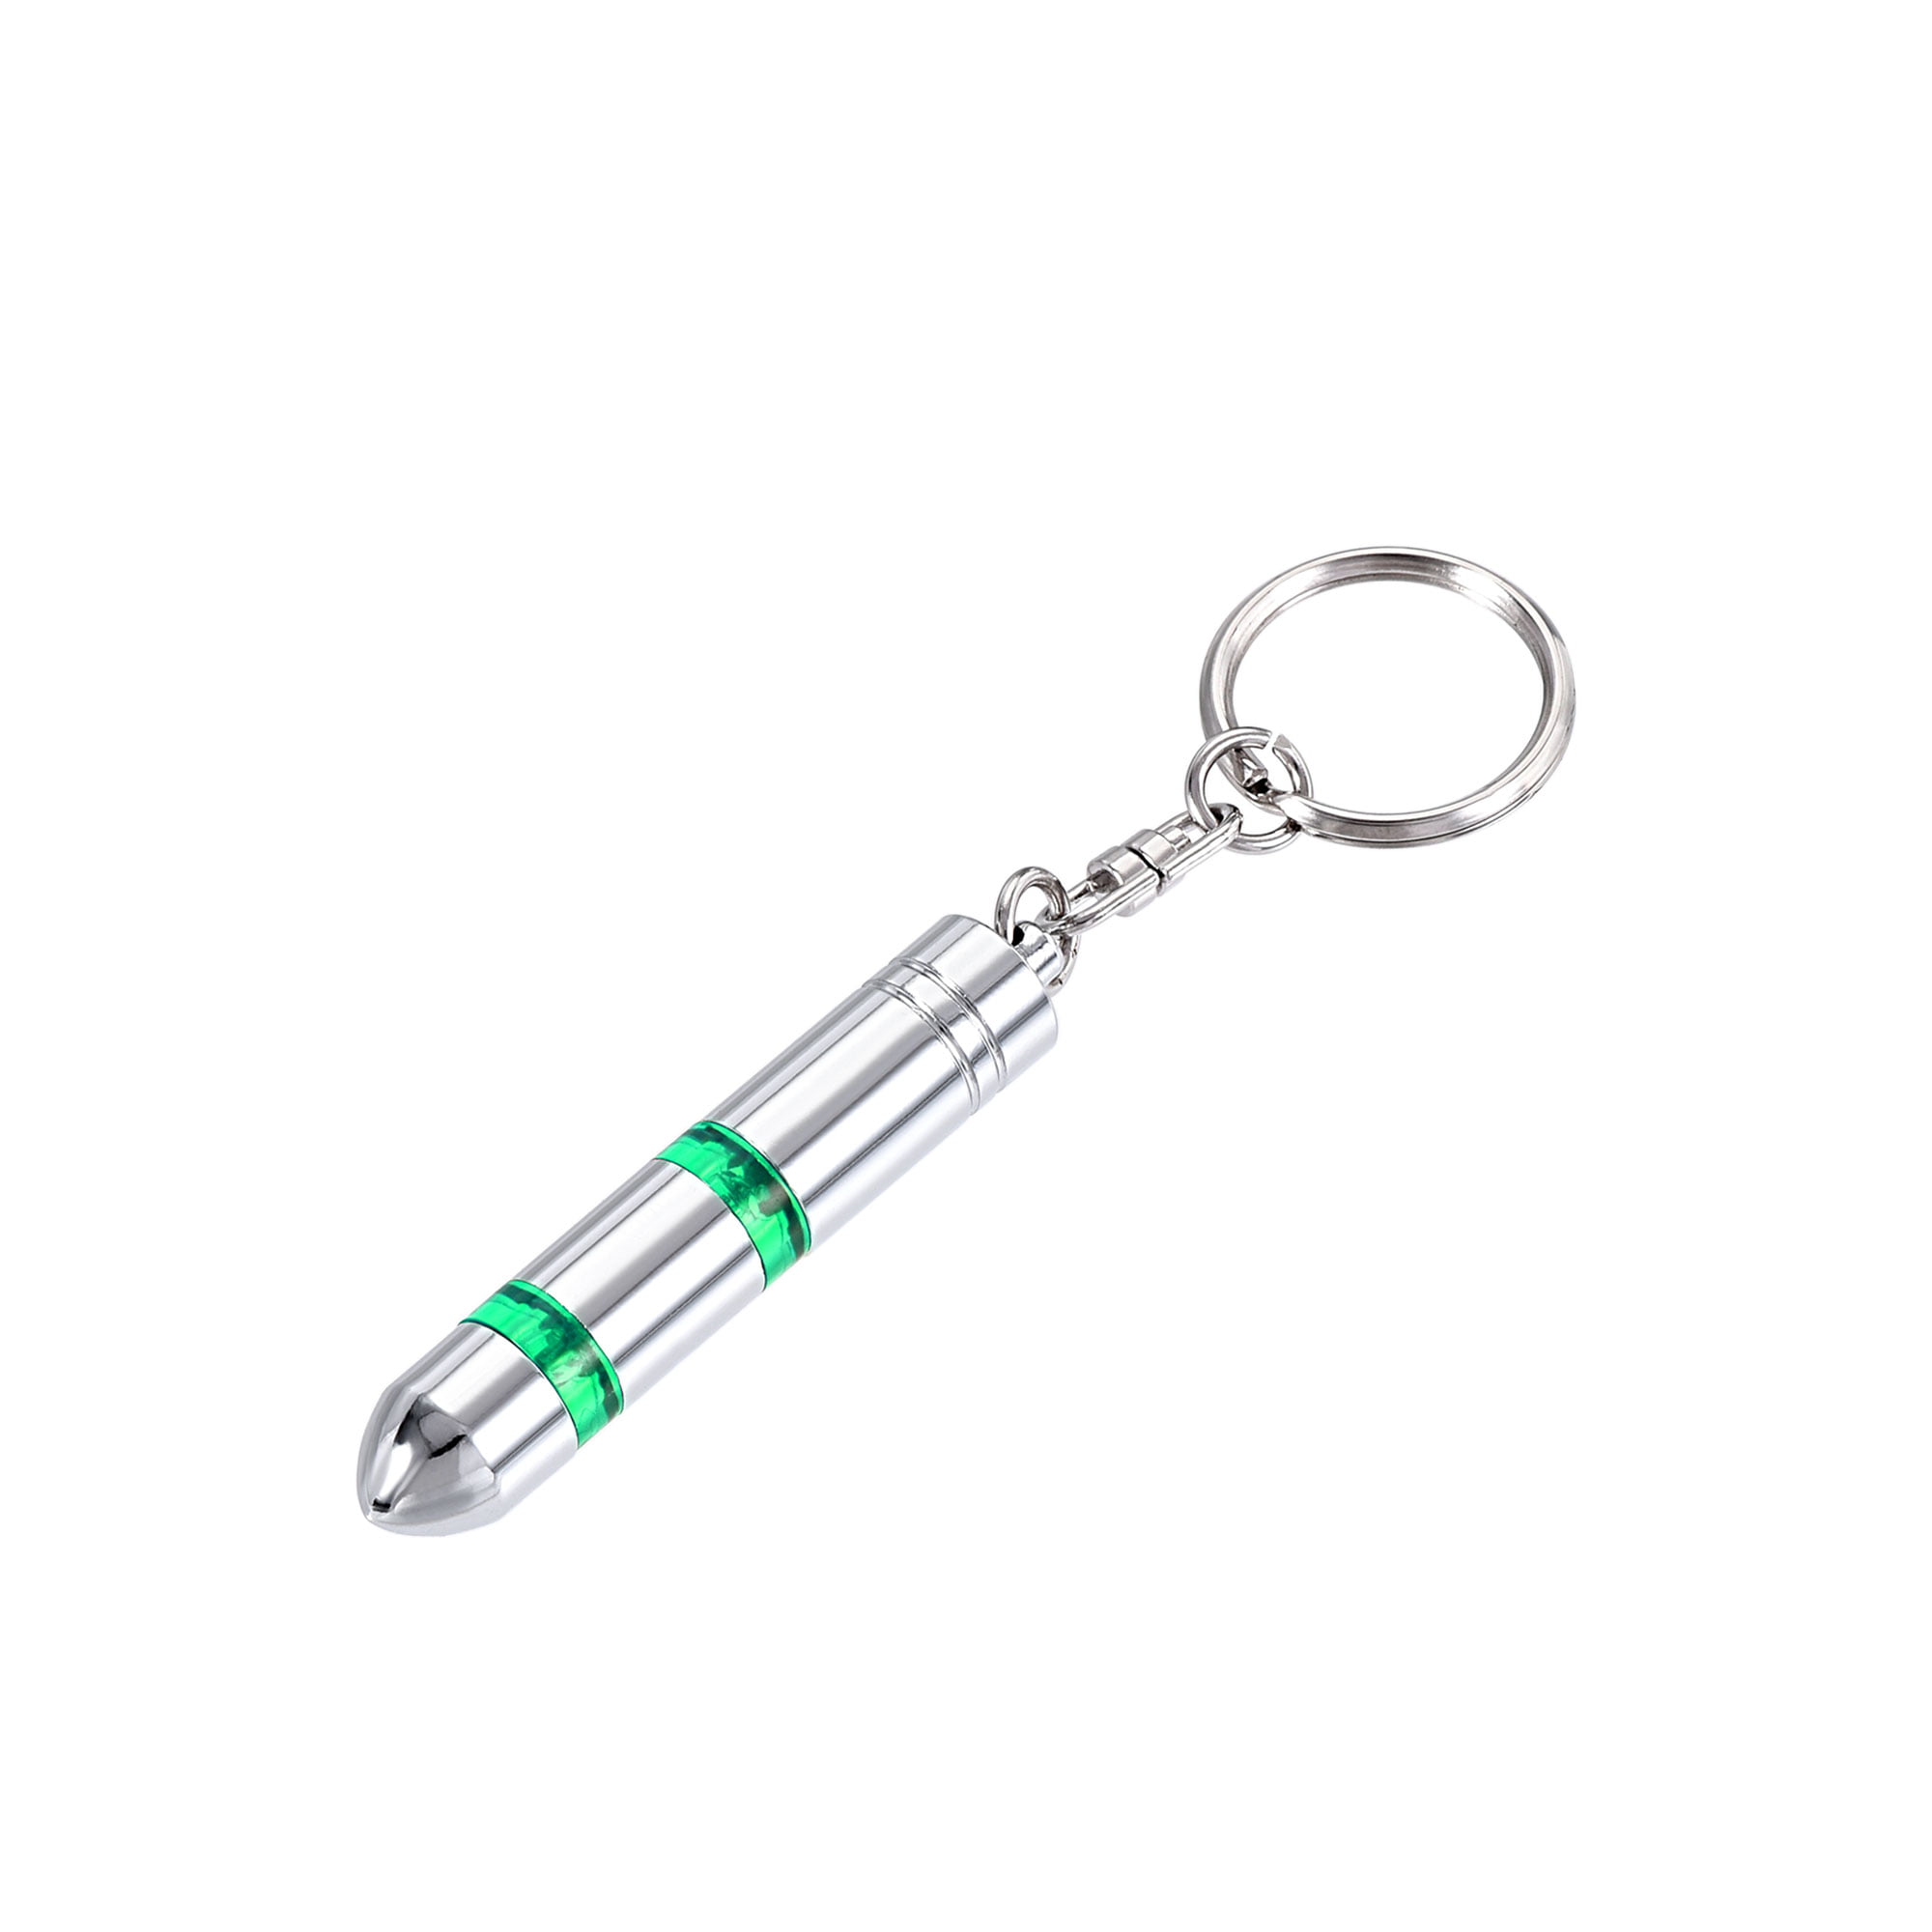 Magic Wand Stick Light saber Keychain LED Light Durable Glow Pen Flash Torches 